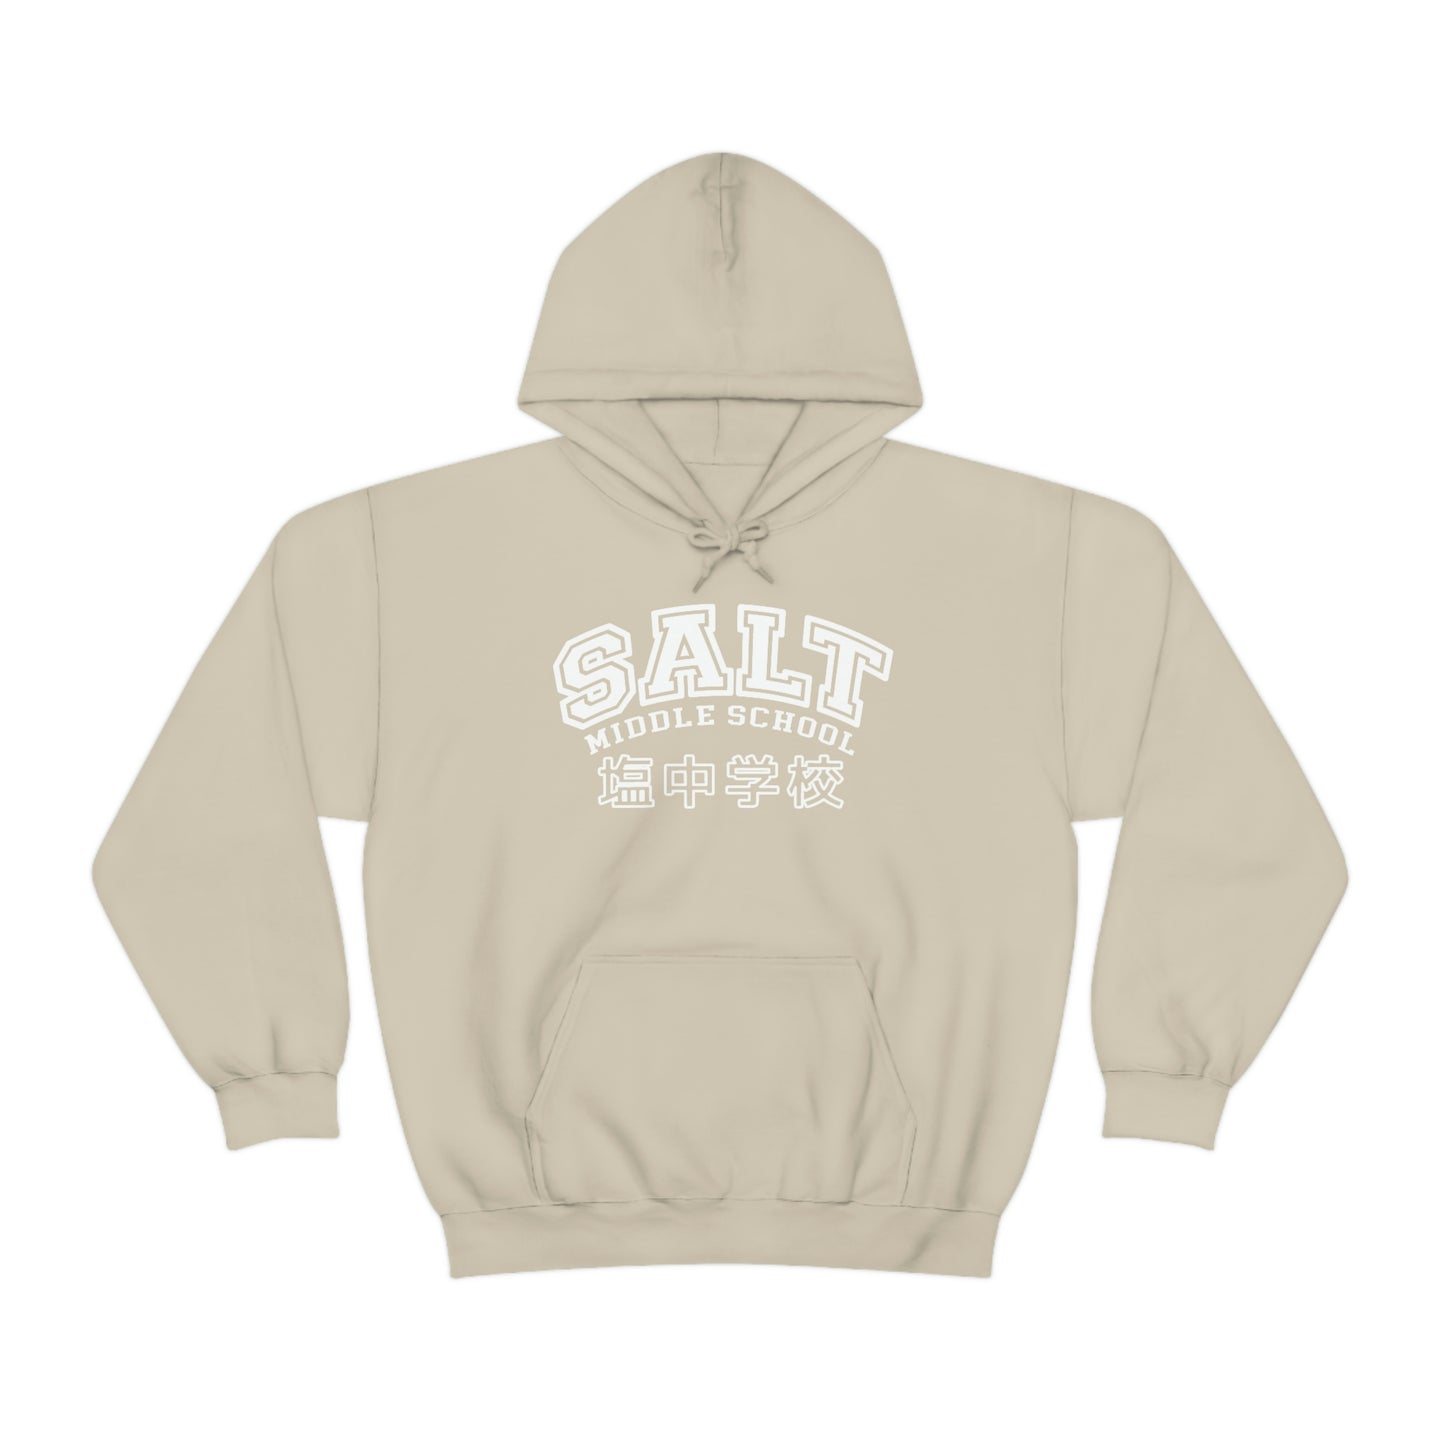 Salt Middle Schools hoodie Body Improvement Club shirt Mobs shigeos